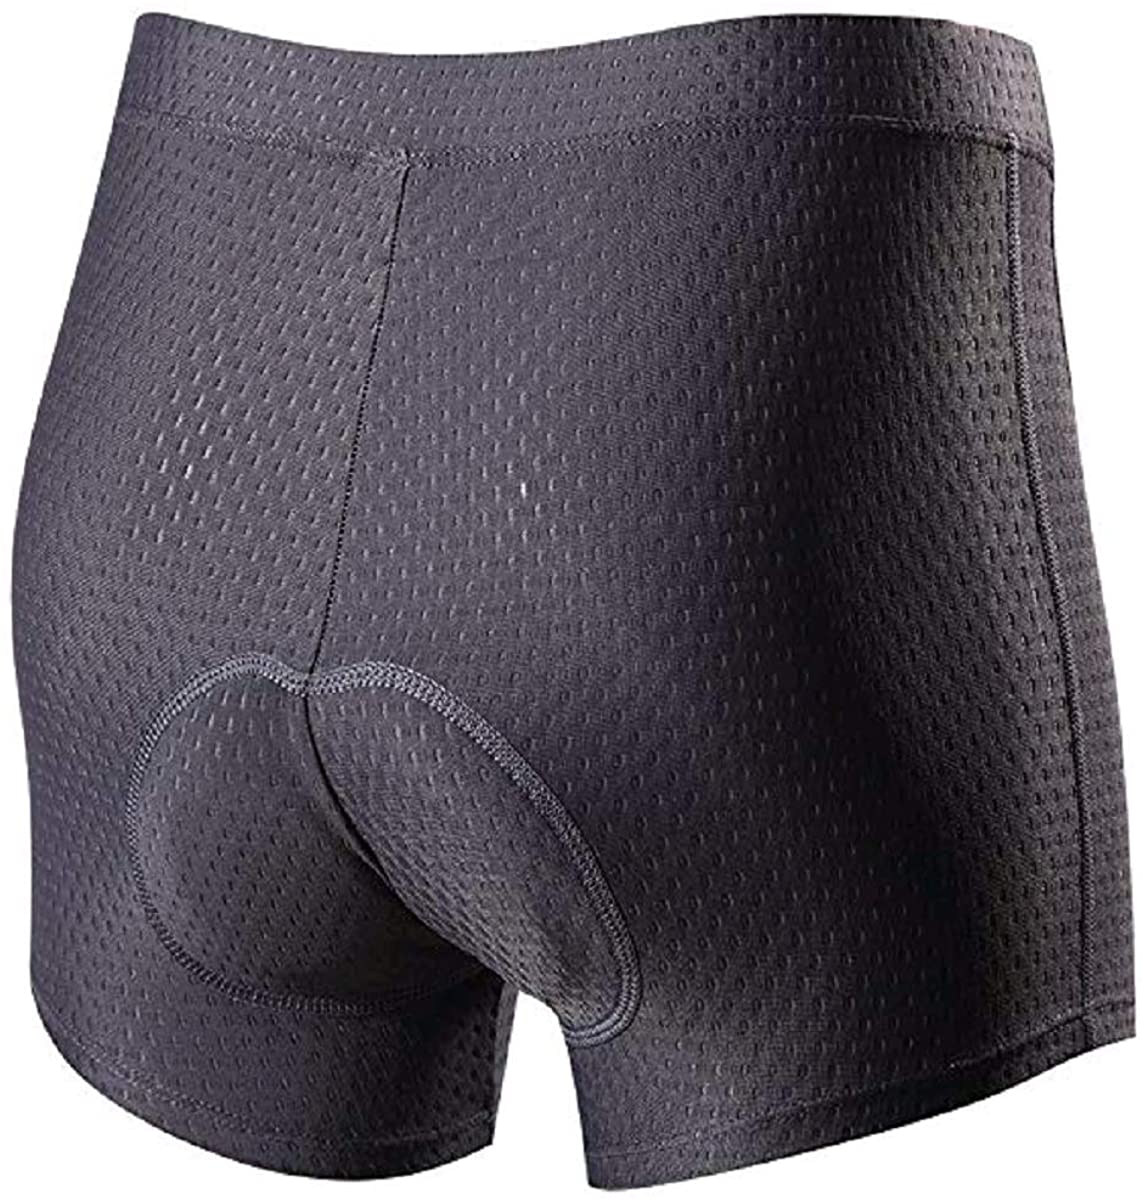 Buy Eco-daily Cycling Shorts Women's 3D Padded Bicycle Bike Biking  Underwear Shorts Online in Italy. B07GRM6B7T